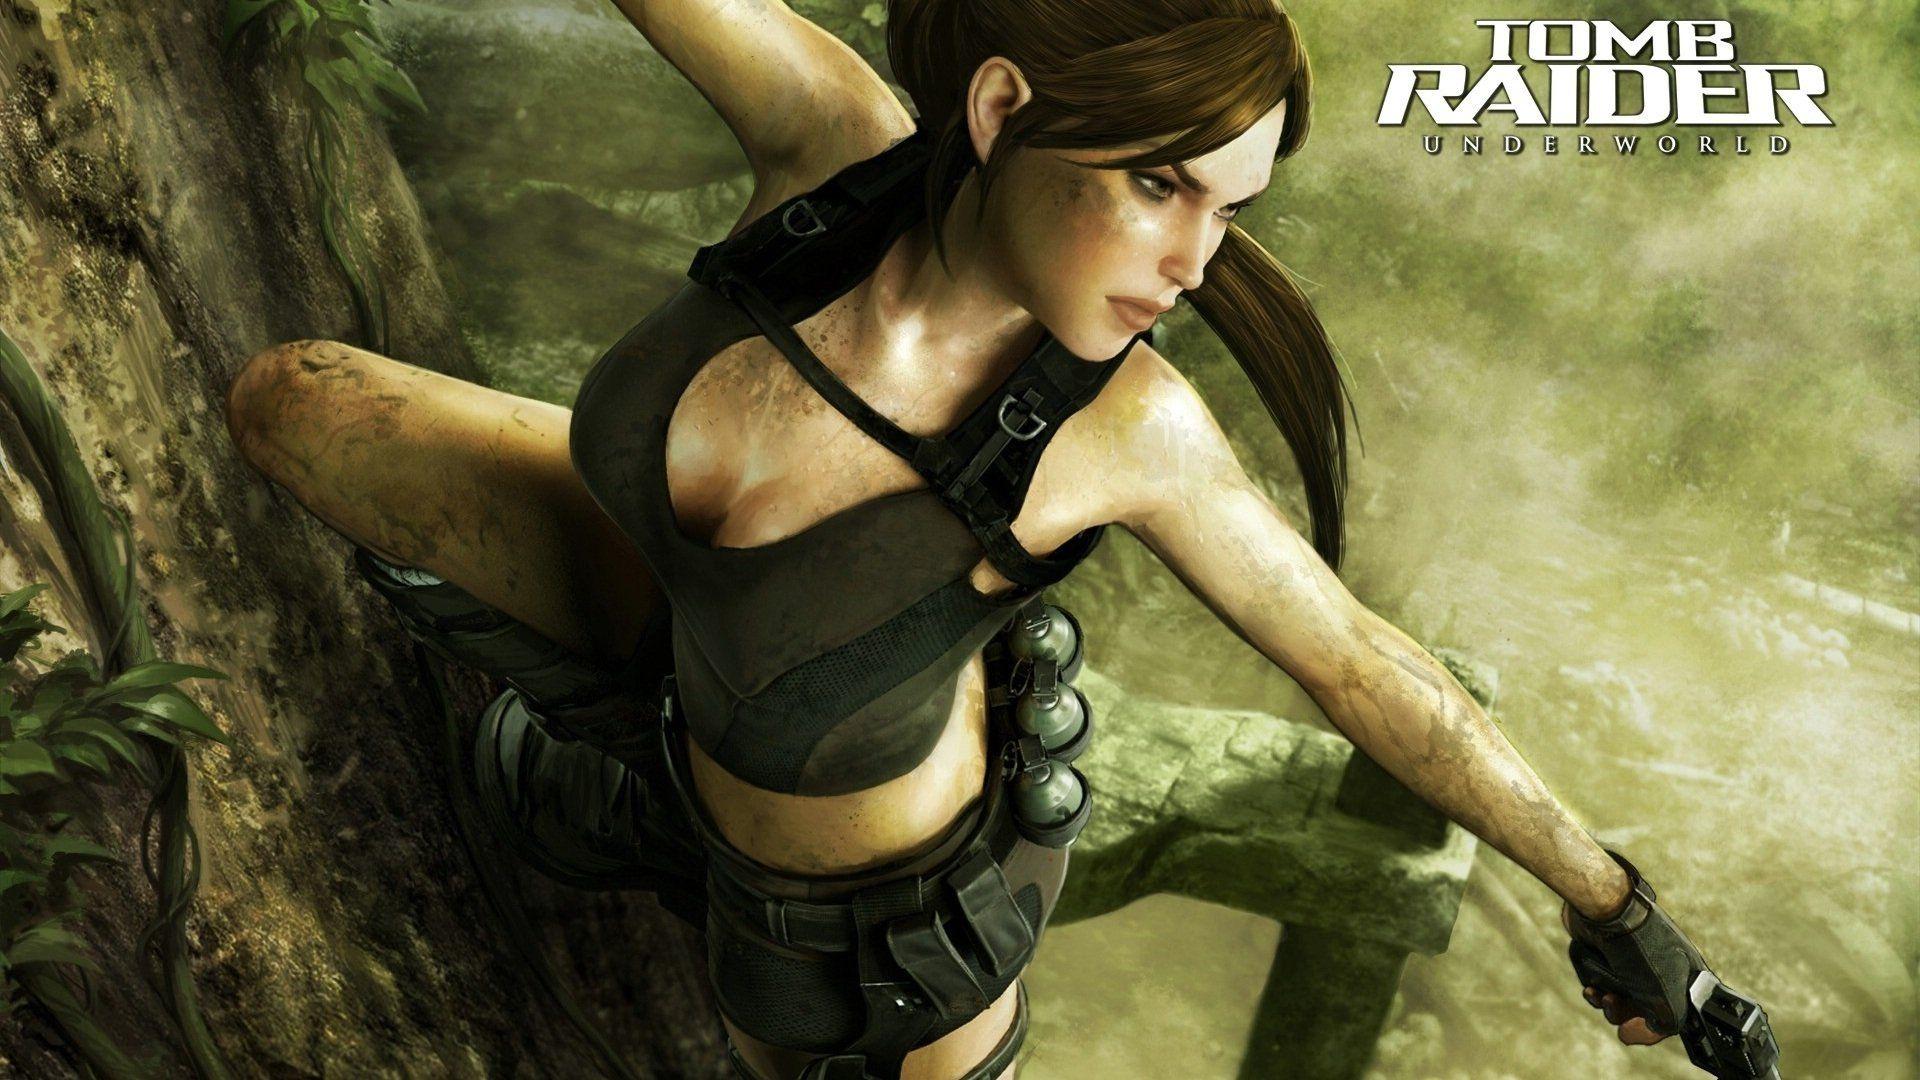 Tomb Raider: Underworld HD Wallpaper and Background Image